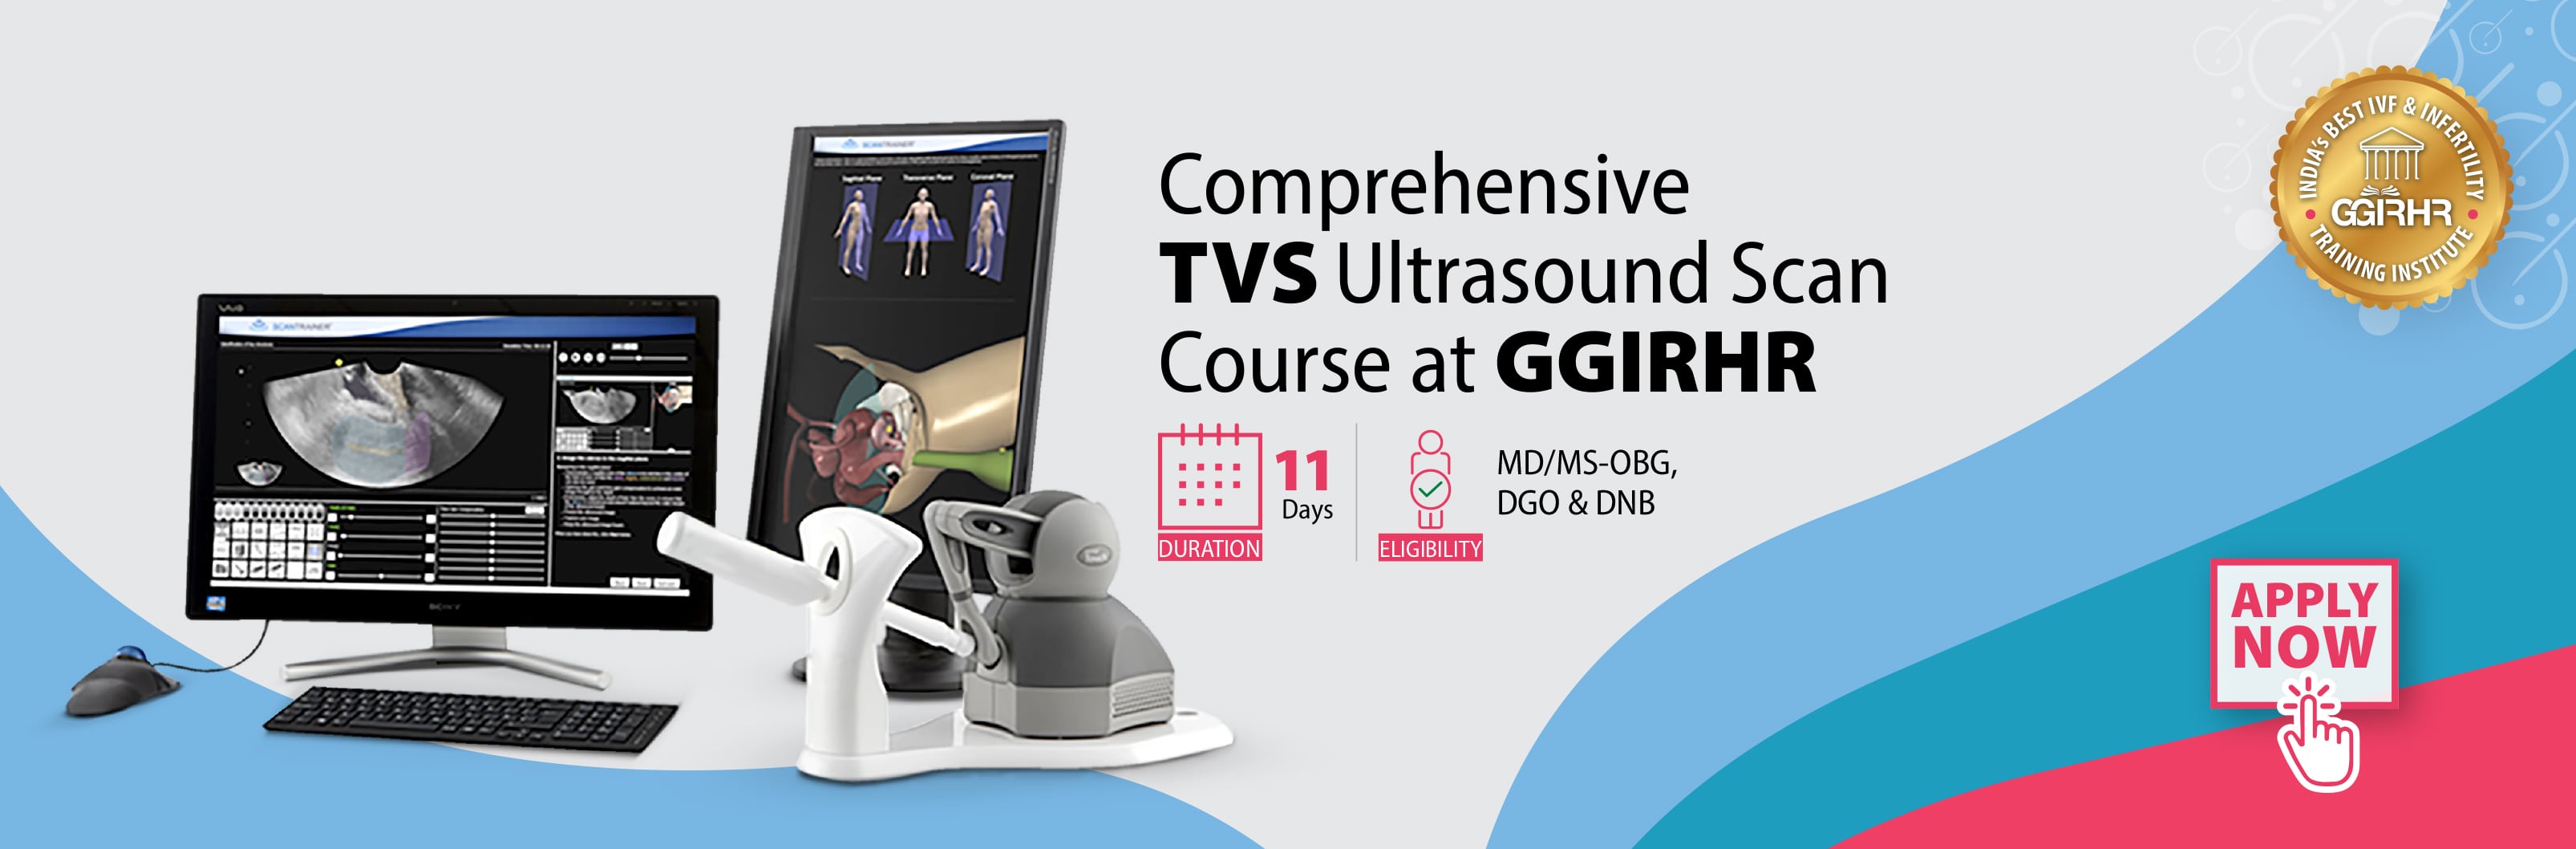 Comprehensive TVS Ultrasound Scan Course